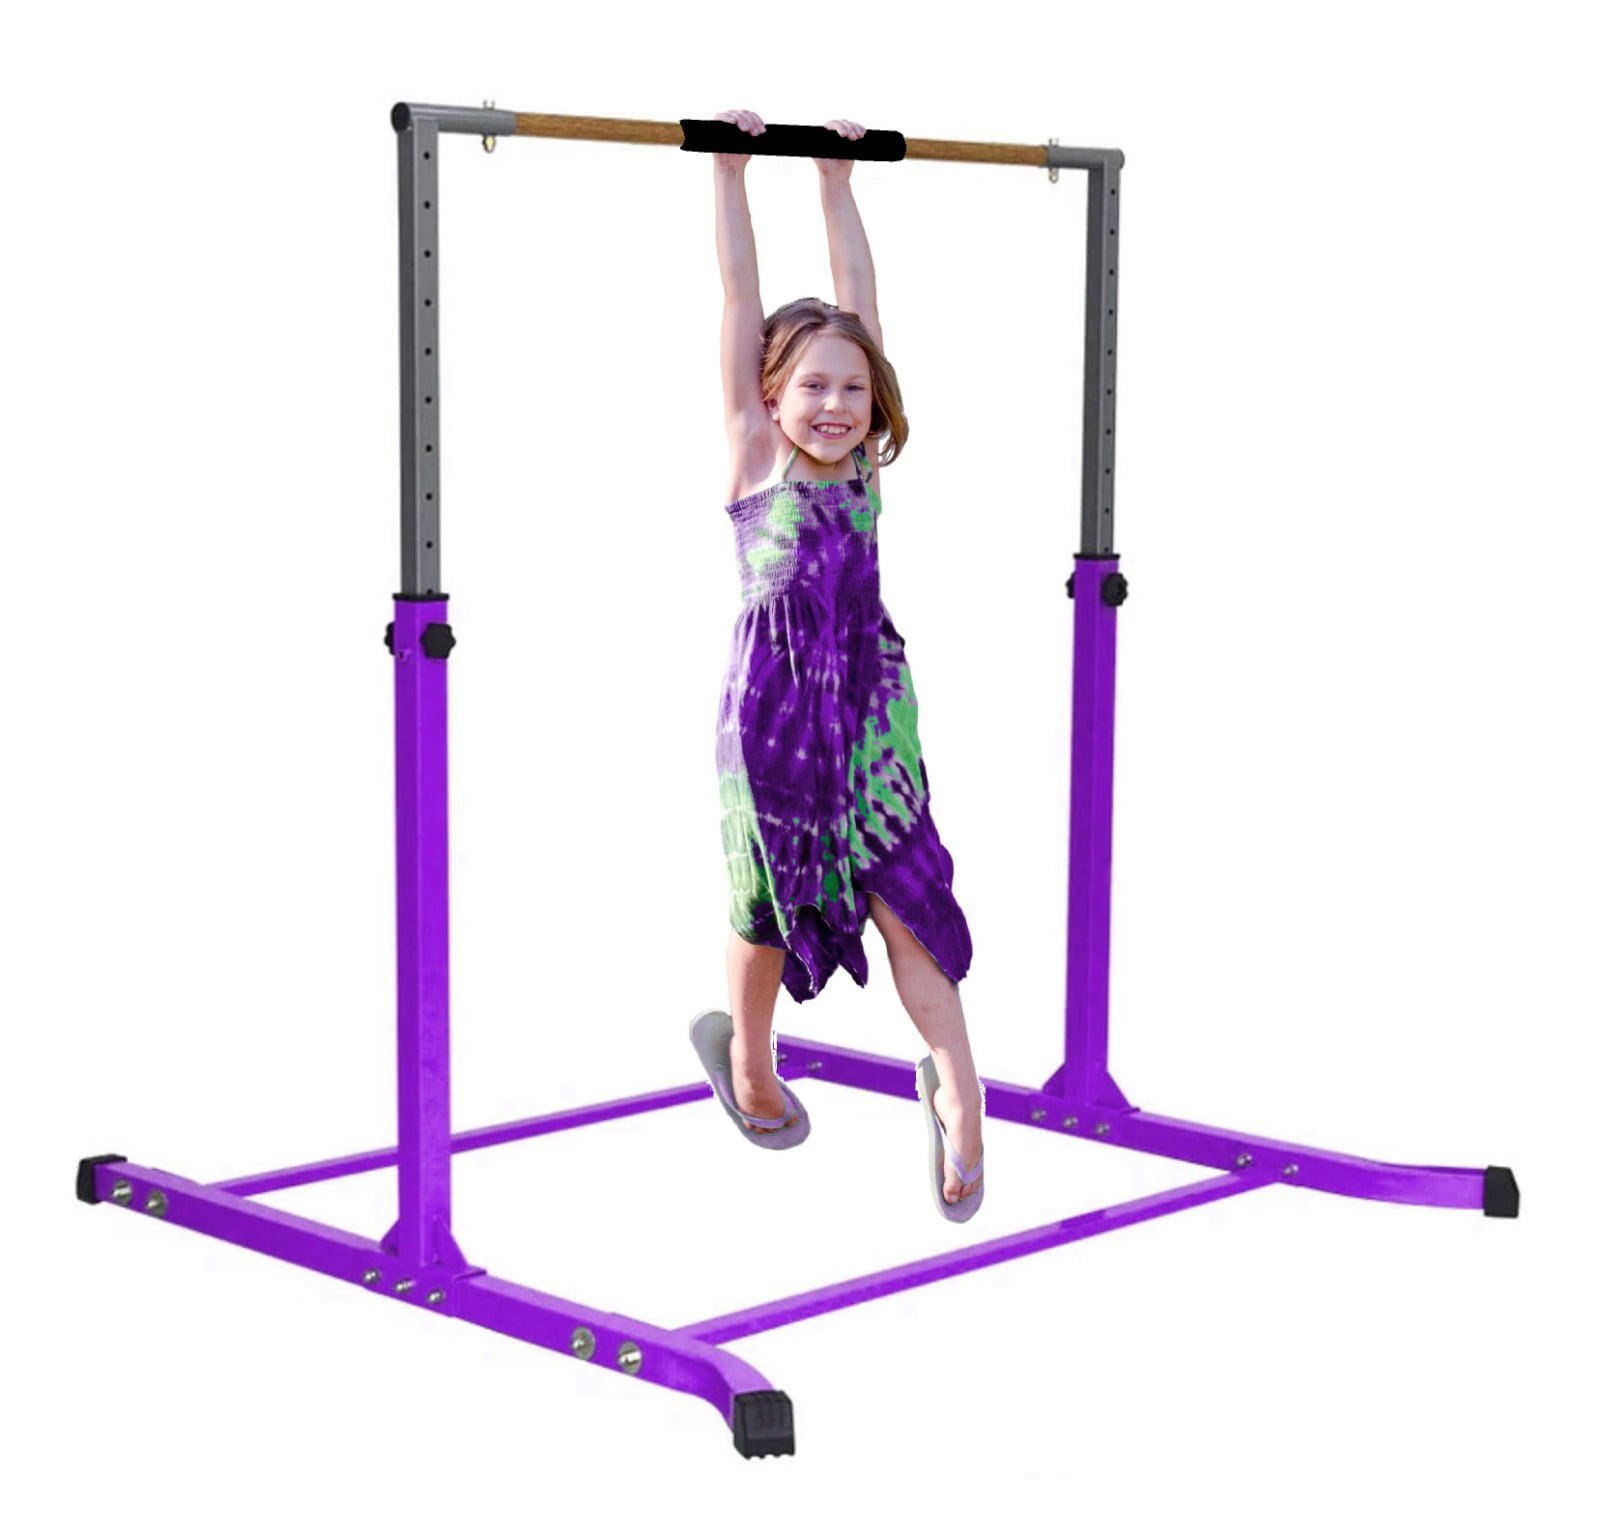 GymPros Horizontal Kip Bar Jungle Gym Gymnastics Training Adjustable 5 FT Purple 